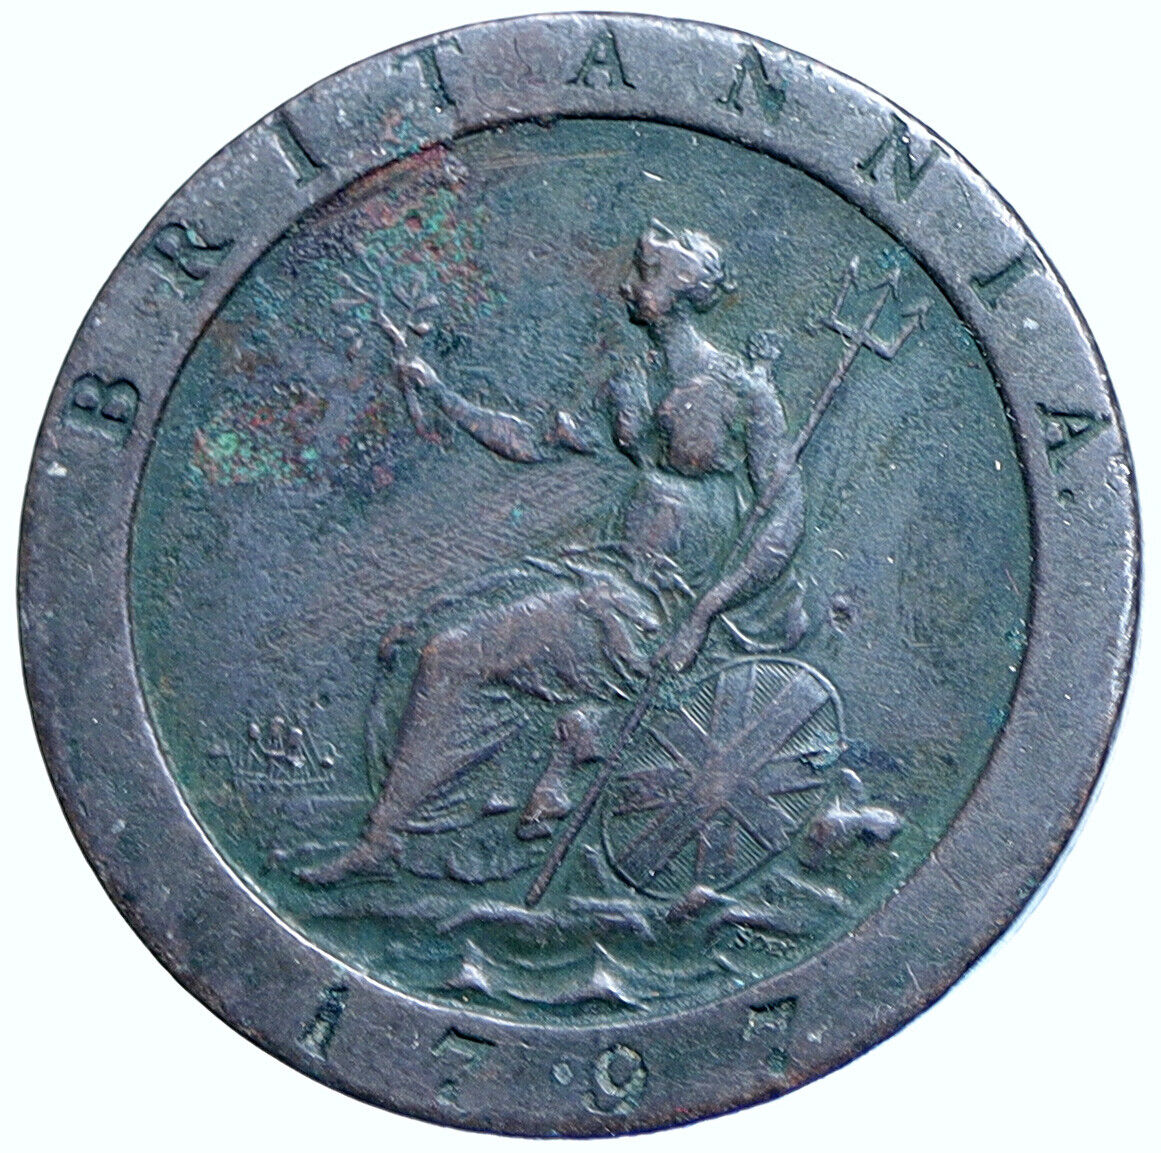 1797 UK Great Britain United Kingdom KING GEORGE III Genuine Penny Coin i113602